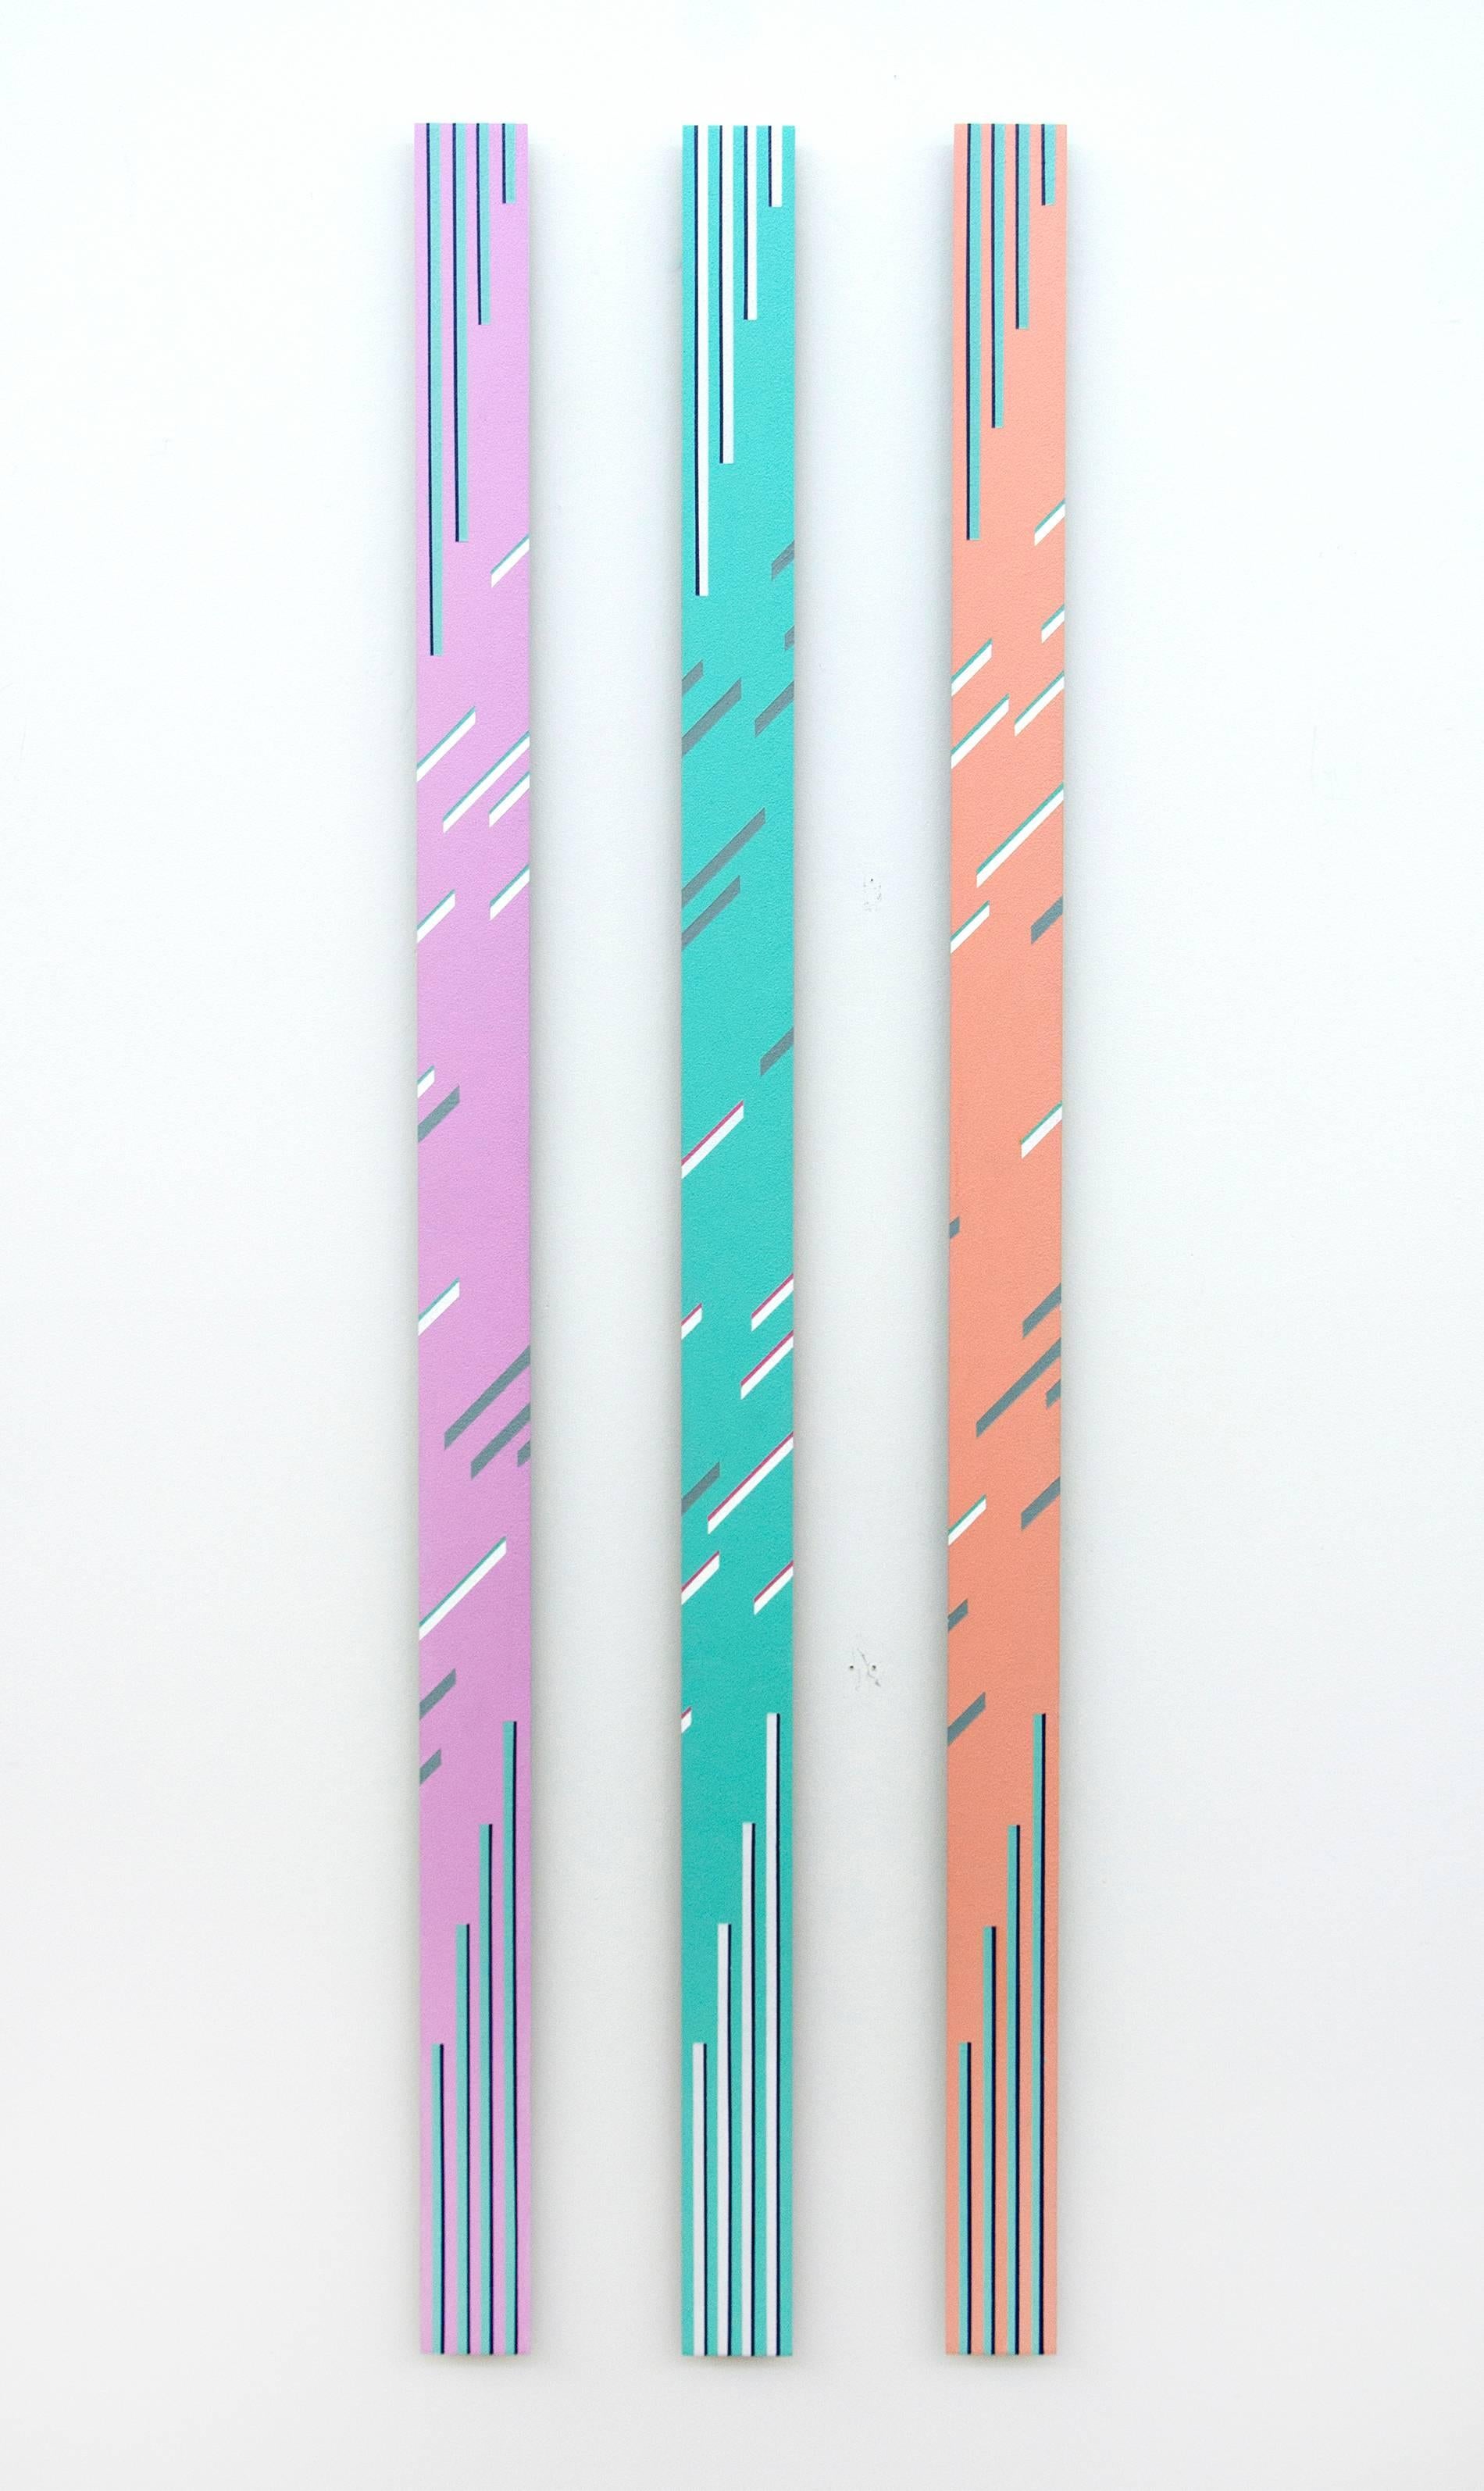 TTH 6.3 Trio - tall, playful geometric shapes, abstract acrylic on aluminum